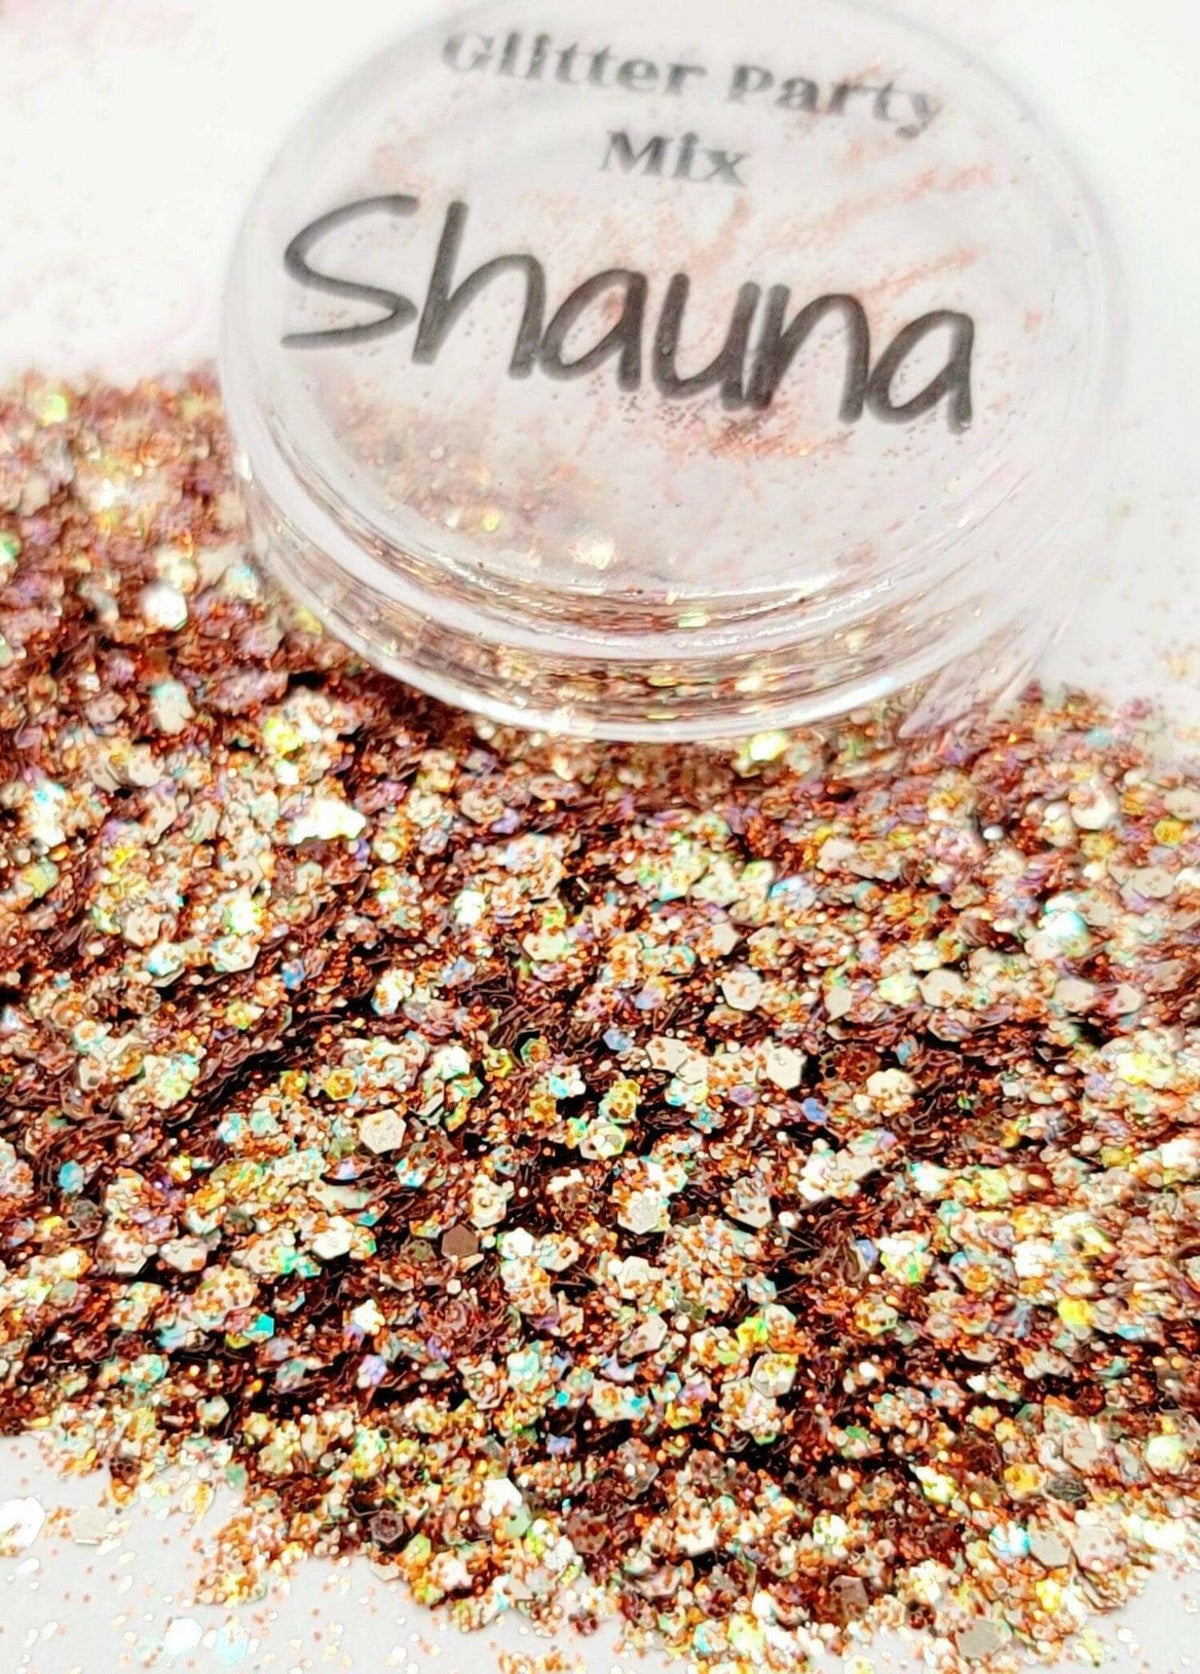 Shauna, Glitter Party Mix (353) - thePINKchair.ca - Glitter - thePINKchair nail studio